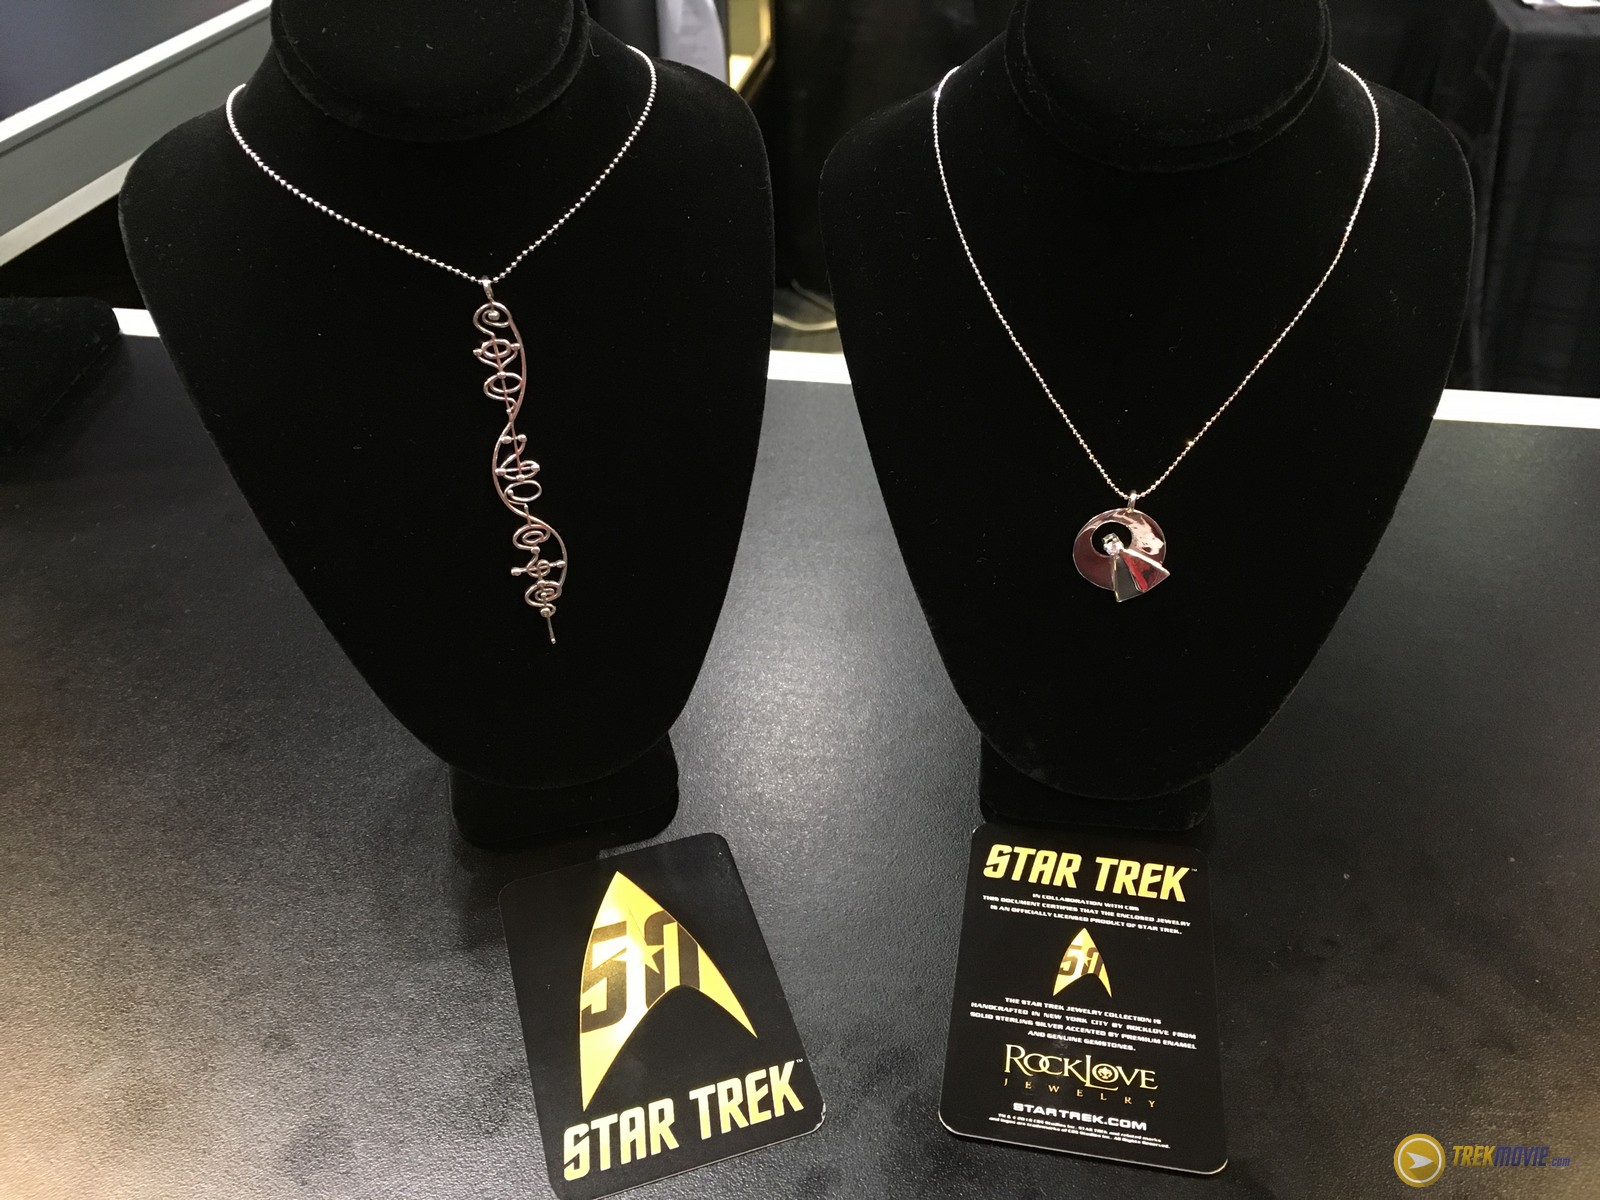 NYCC Star Trek Merchandise Highlights From Eaglemoss, Anovos